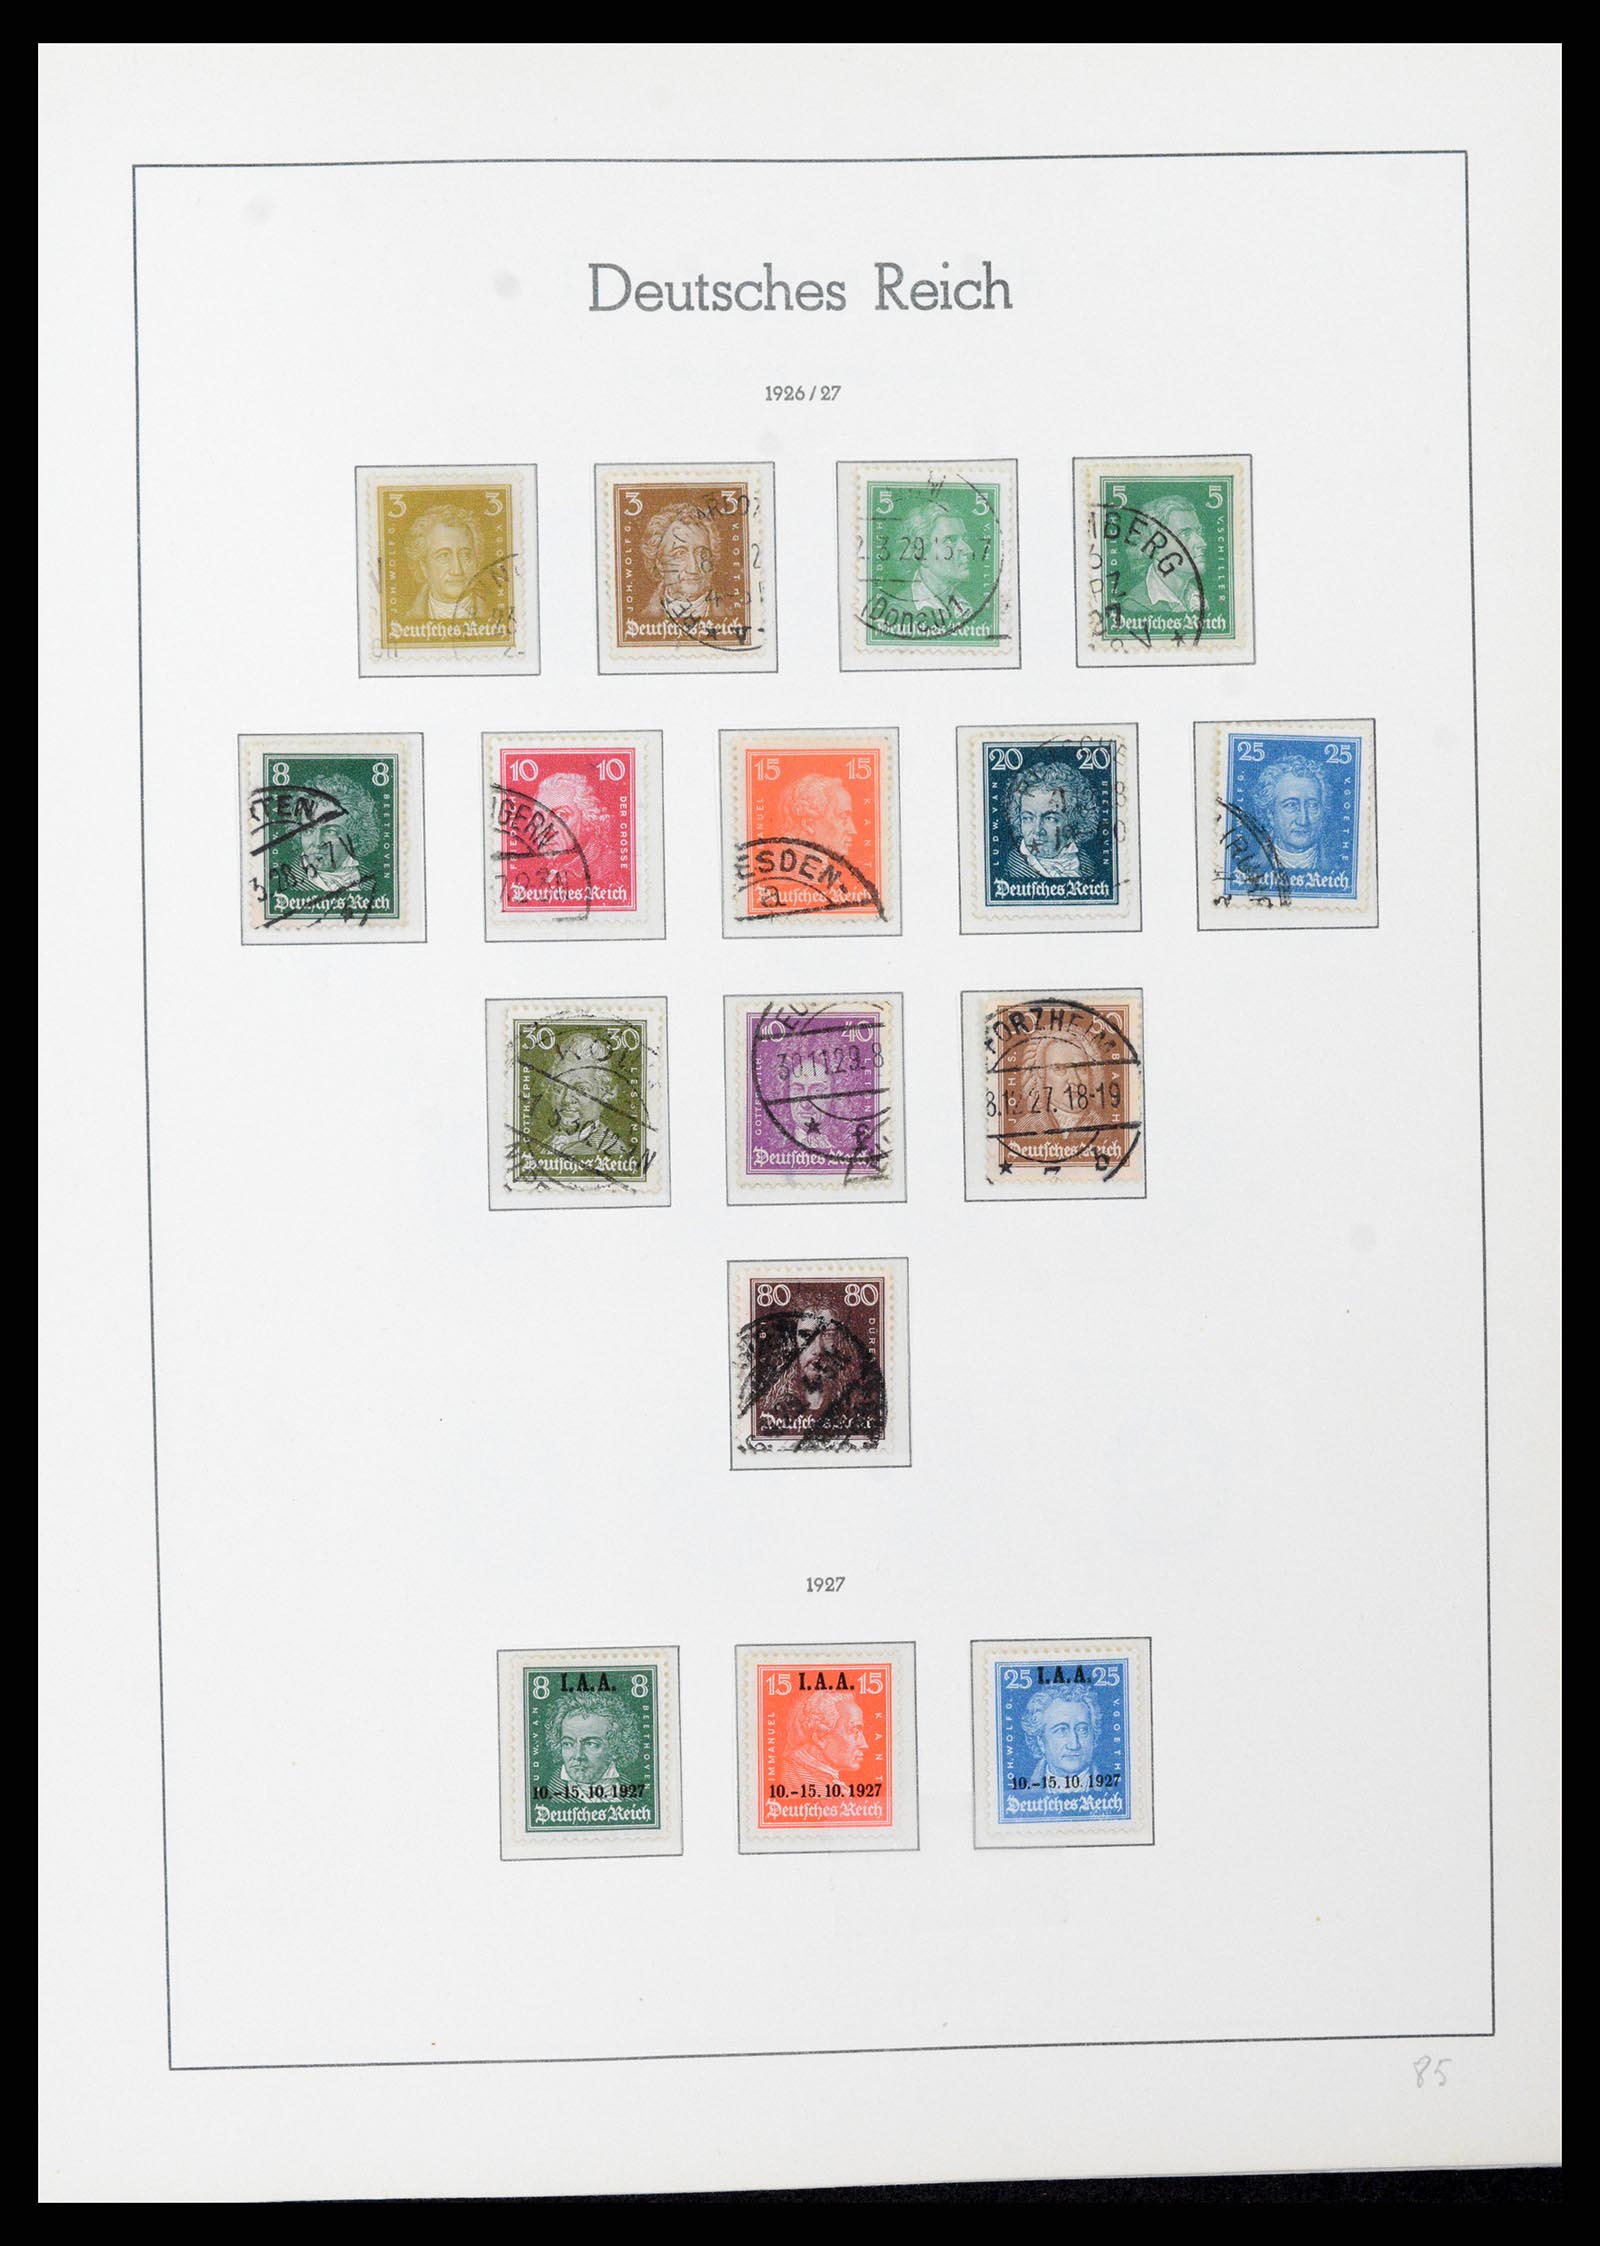 37589 037 - Stamp collection 37589 German Reich 1872-1945.